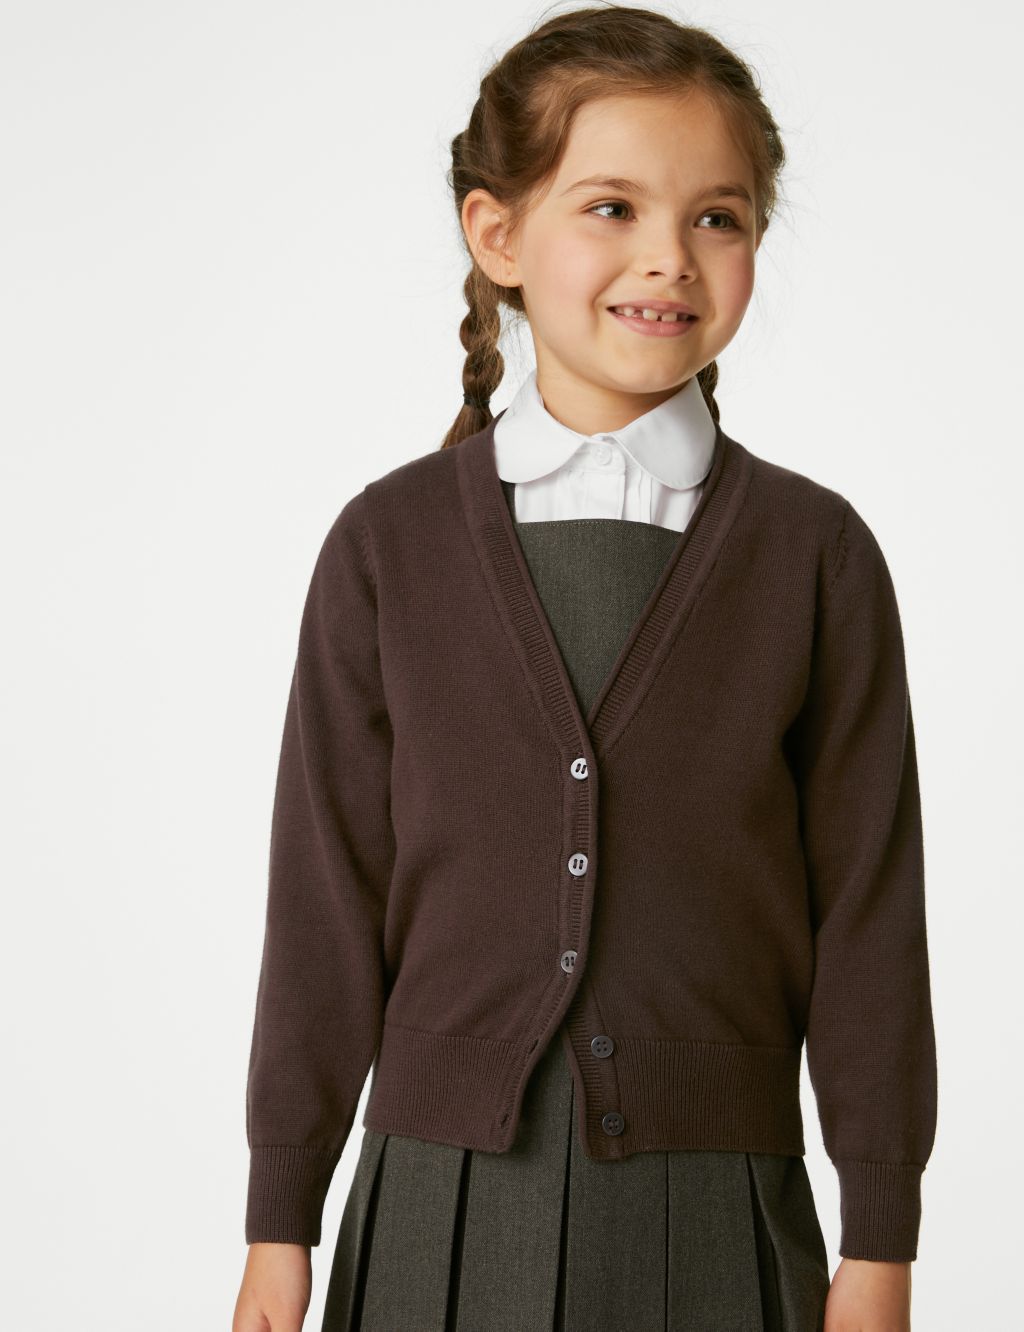 2pk Girls' Pure Cotton School Cardigan (3-18 Yrs) image 2